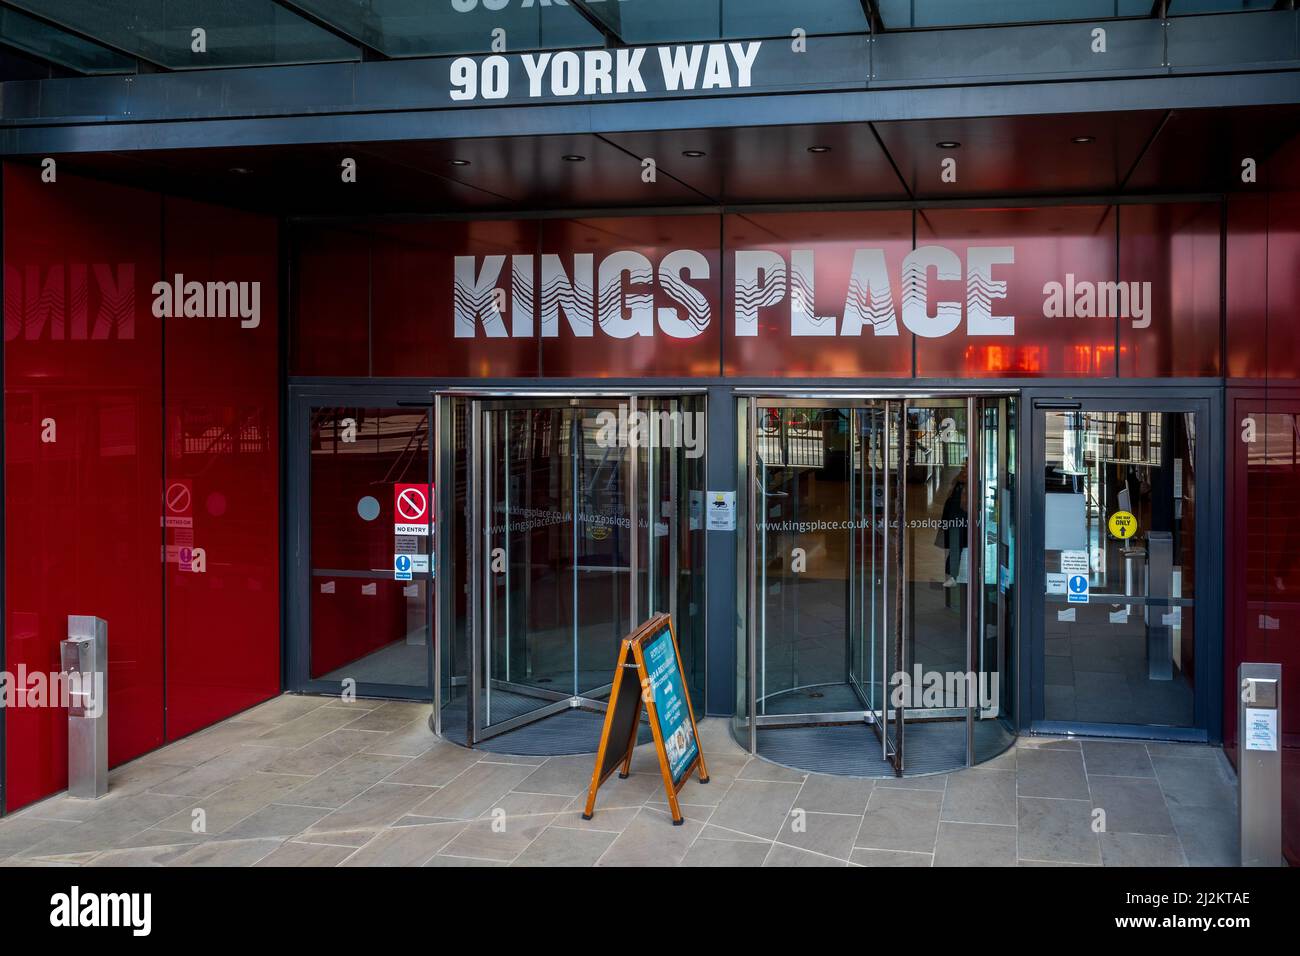 Kings Place London Entrance - Kings Place enthält Konzerträume, Kunstgalerien und Geschäftsbüros. Architekt Dixon Jones 2008. Stockfoto